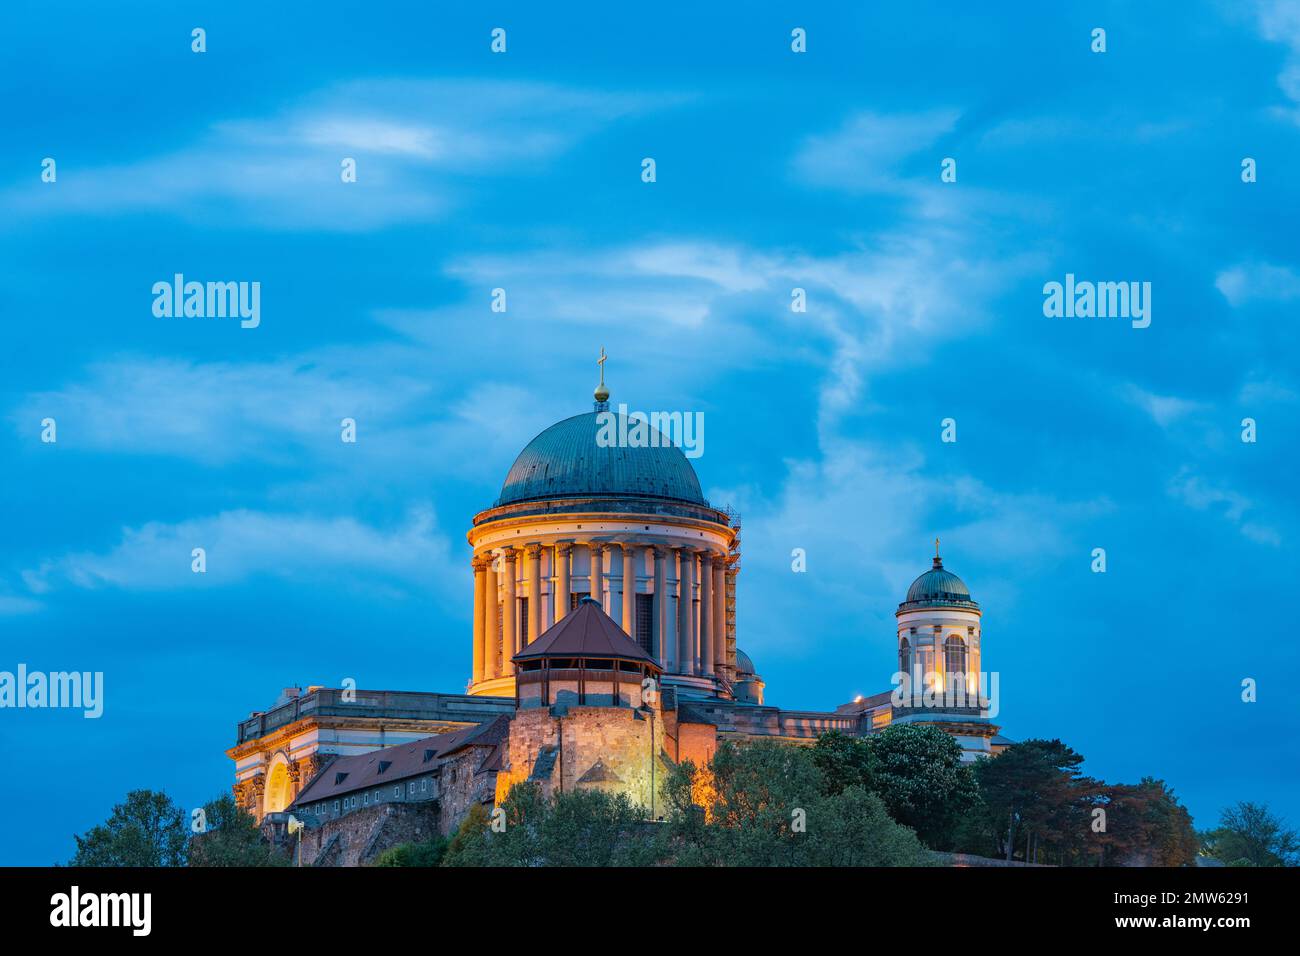 Esztergom basilica, Hungary at night Stock Photo